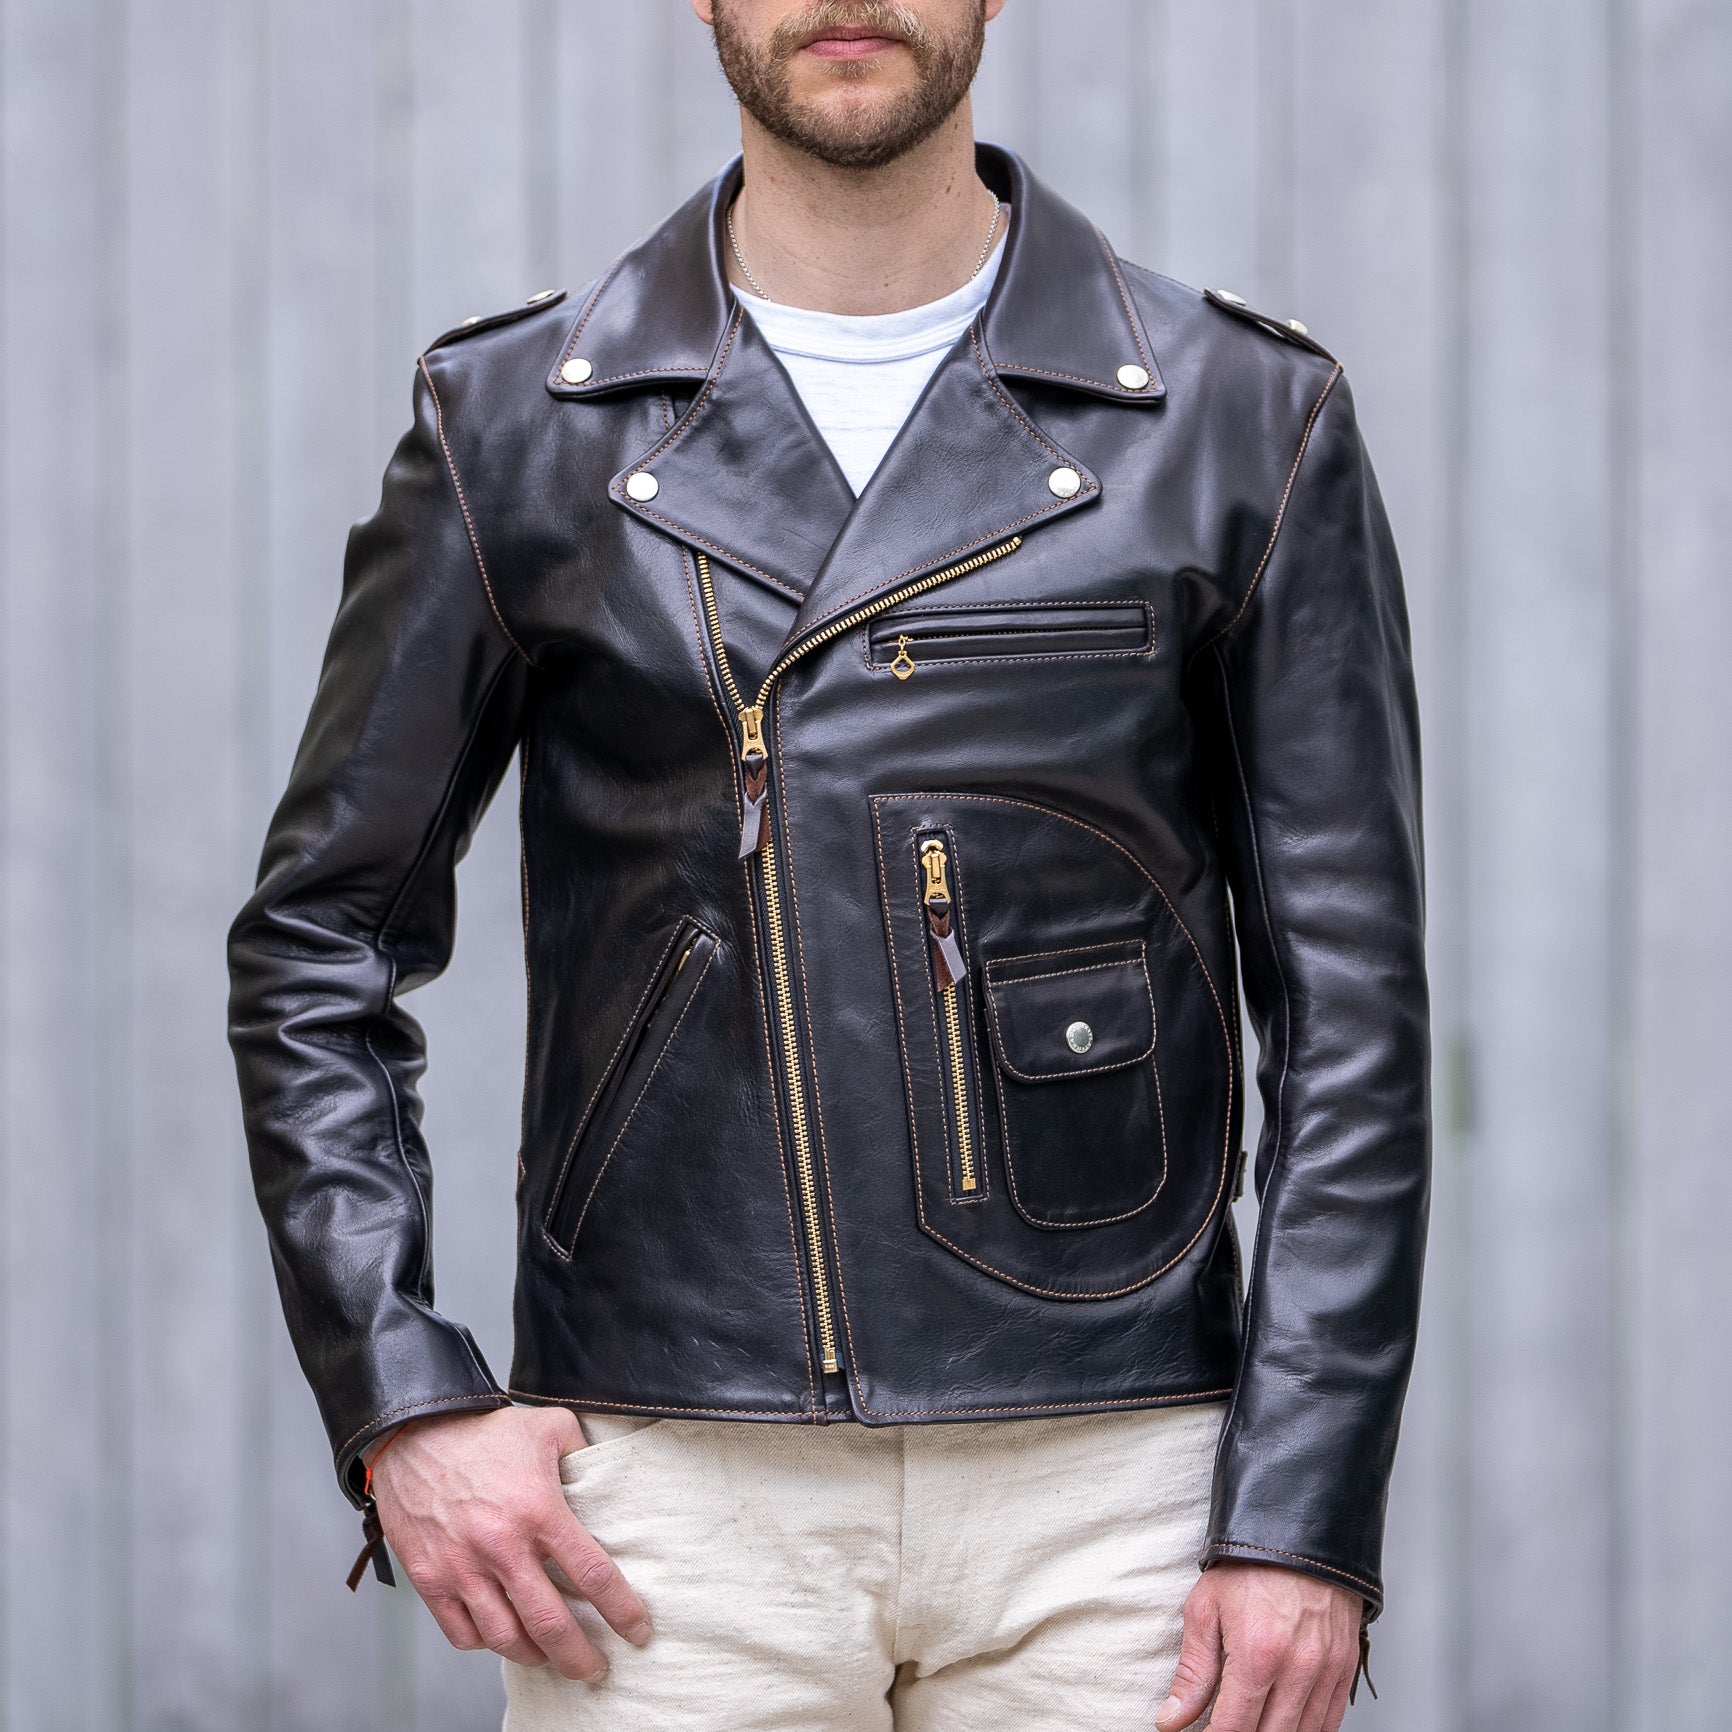 Universal Jacket: Hollywood Handmade Leather Jackets & Apparel